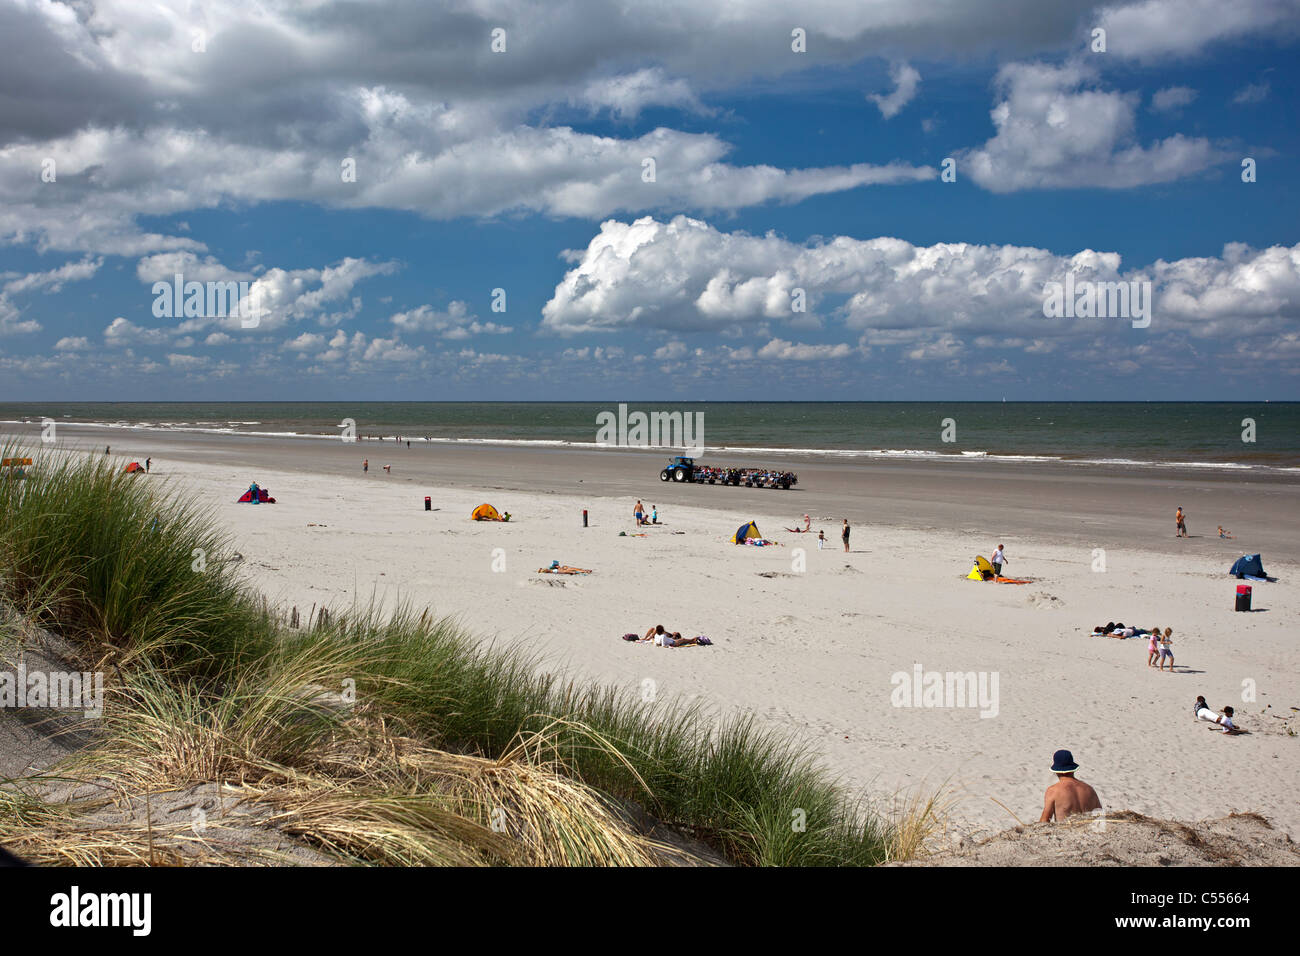 The Netherlands, Buren, Ameland Island, belonging to Wadden Sea Islands. Unesco World Heritage Site. People on beach. Stock Photo